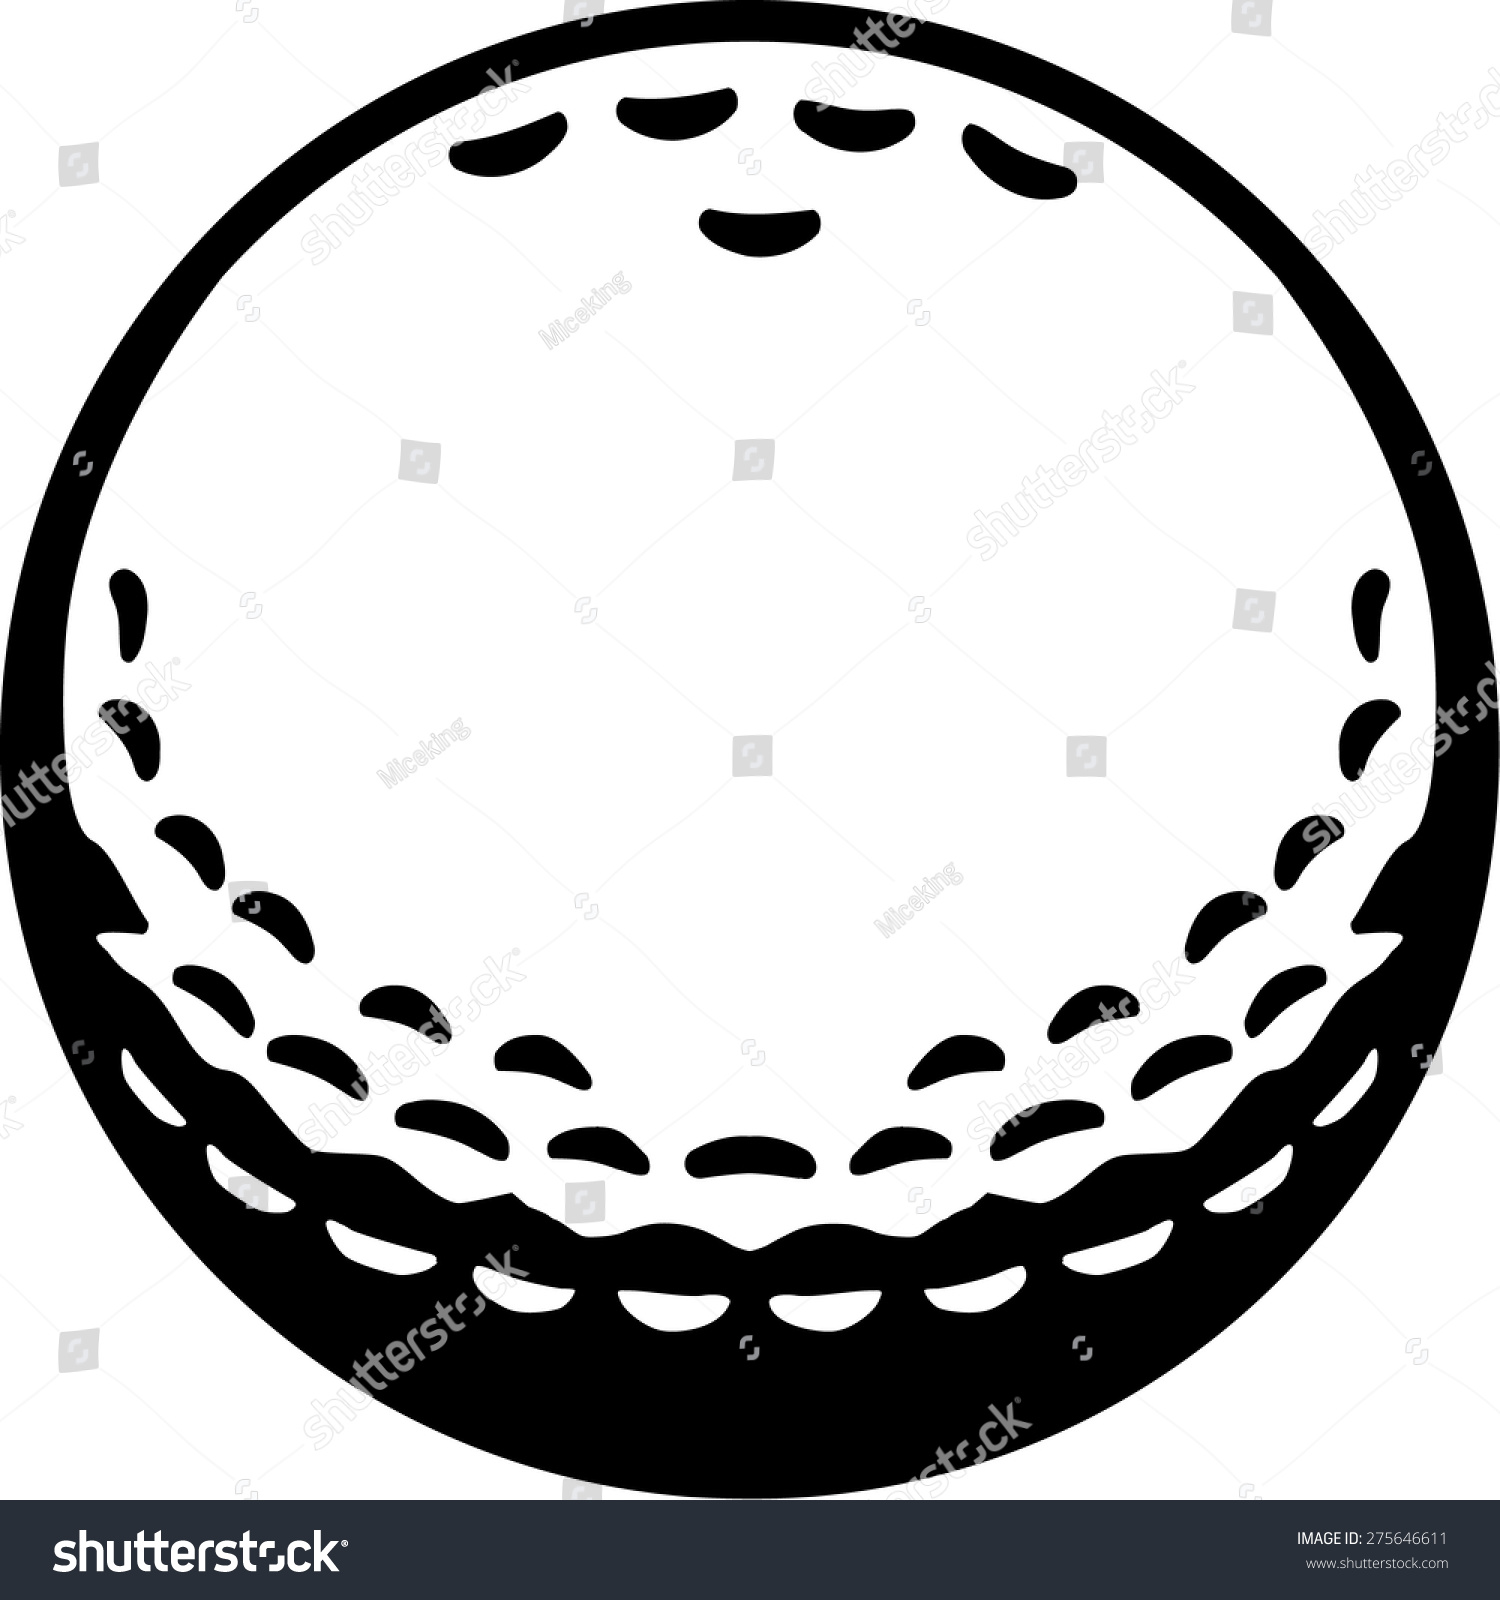 golf ball clip art free vector - photo #28